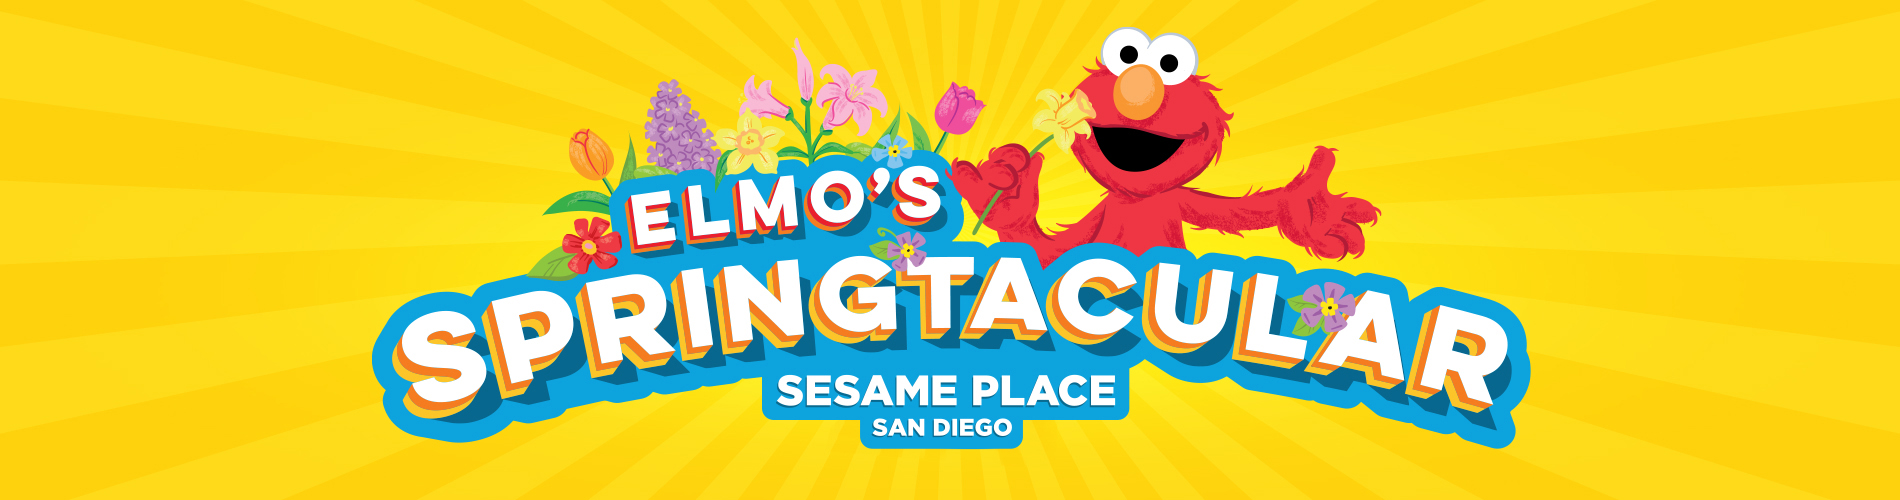 Elmos Springtacular at Sesame Place San Diego